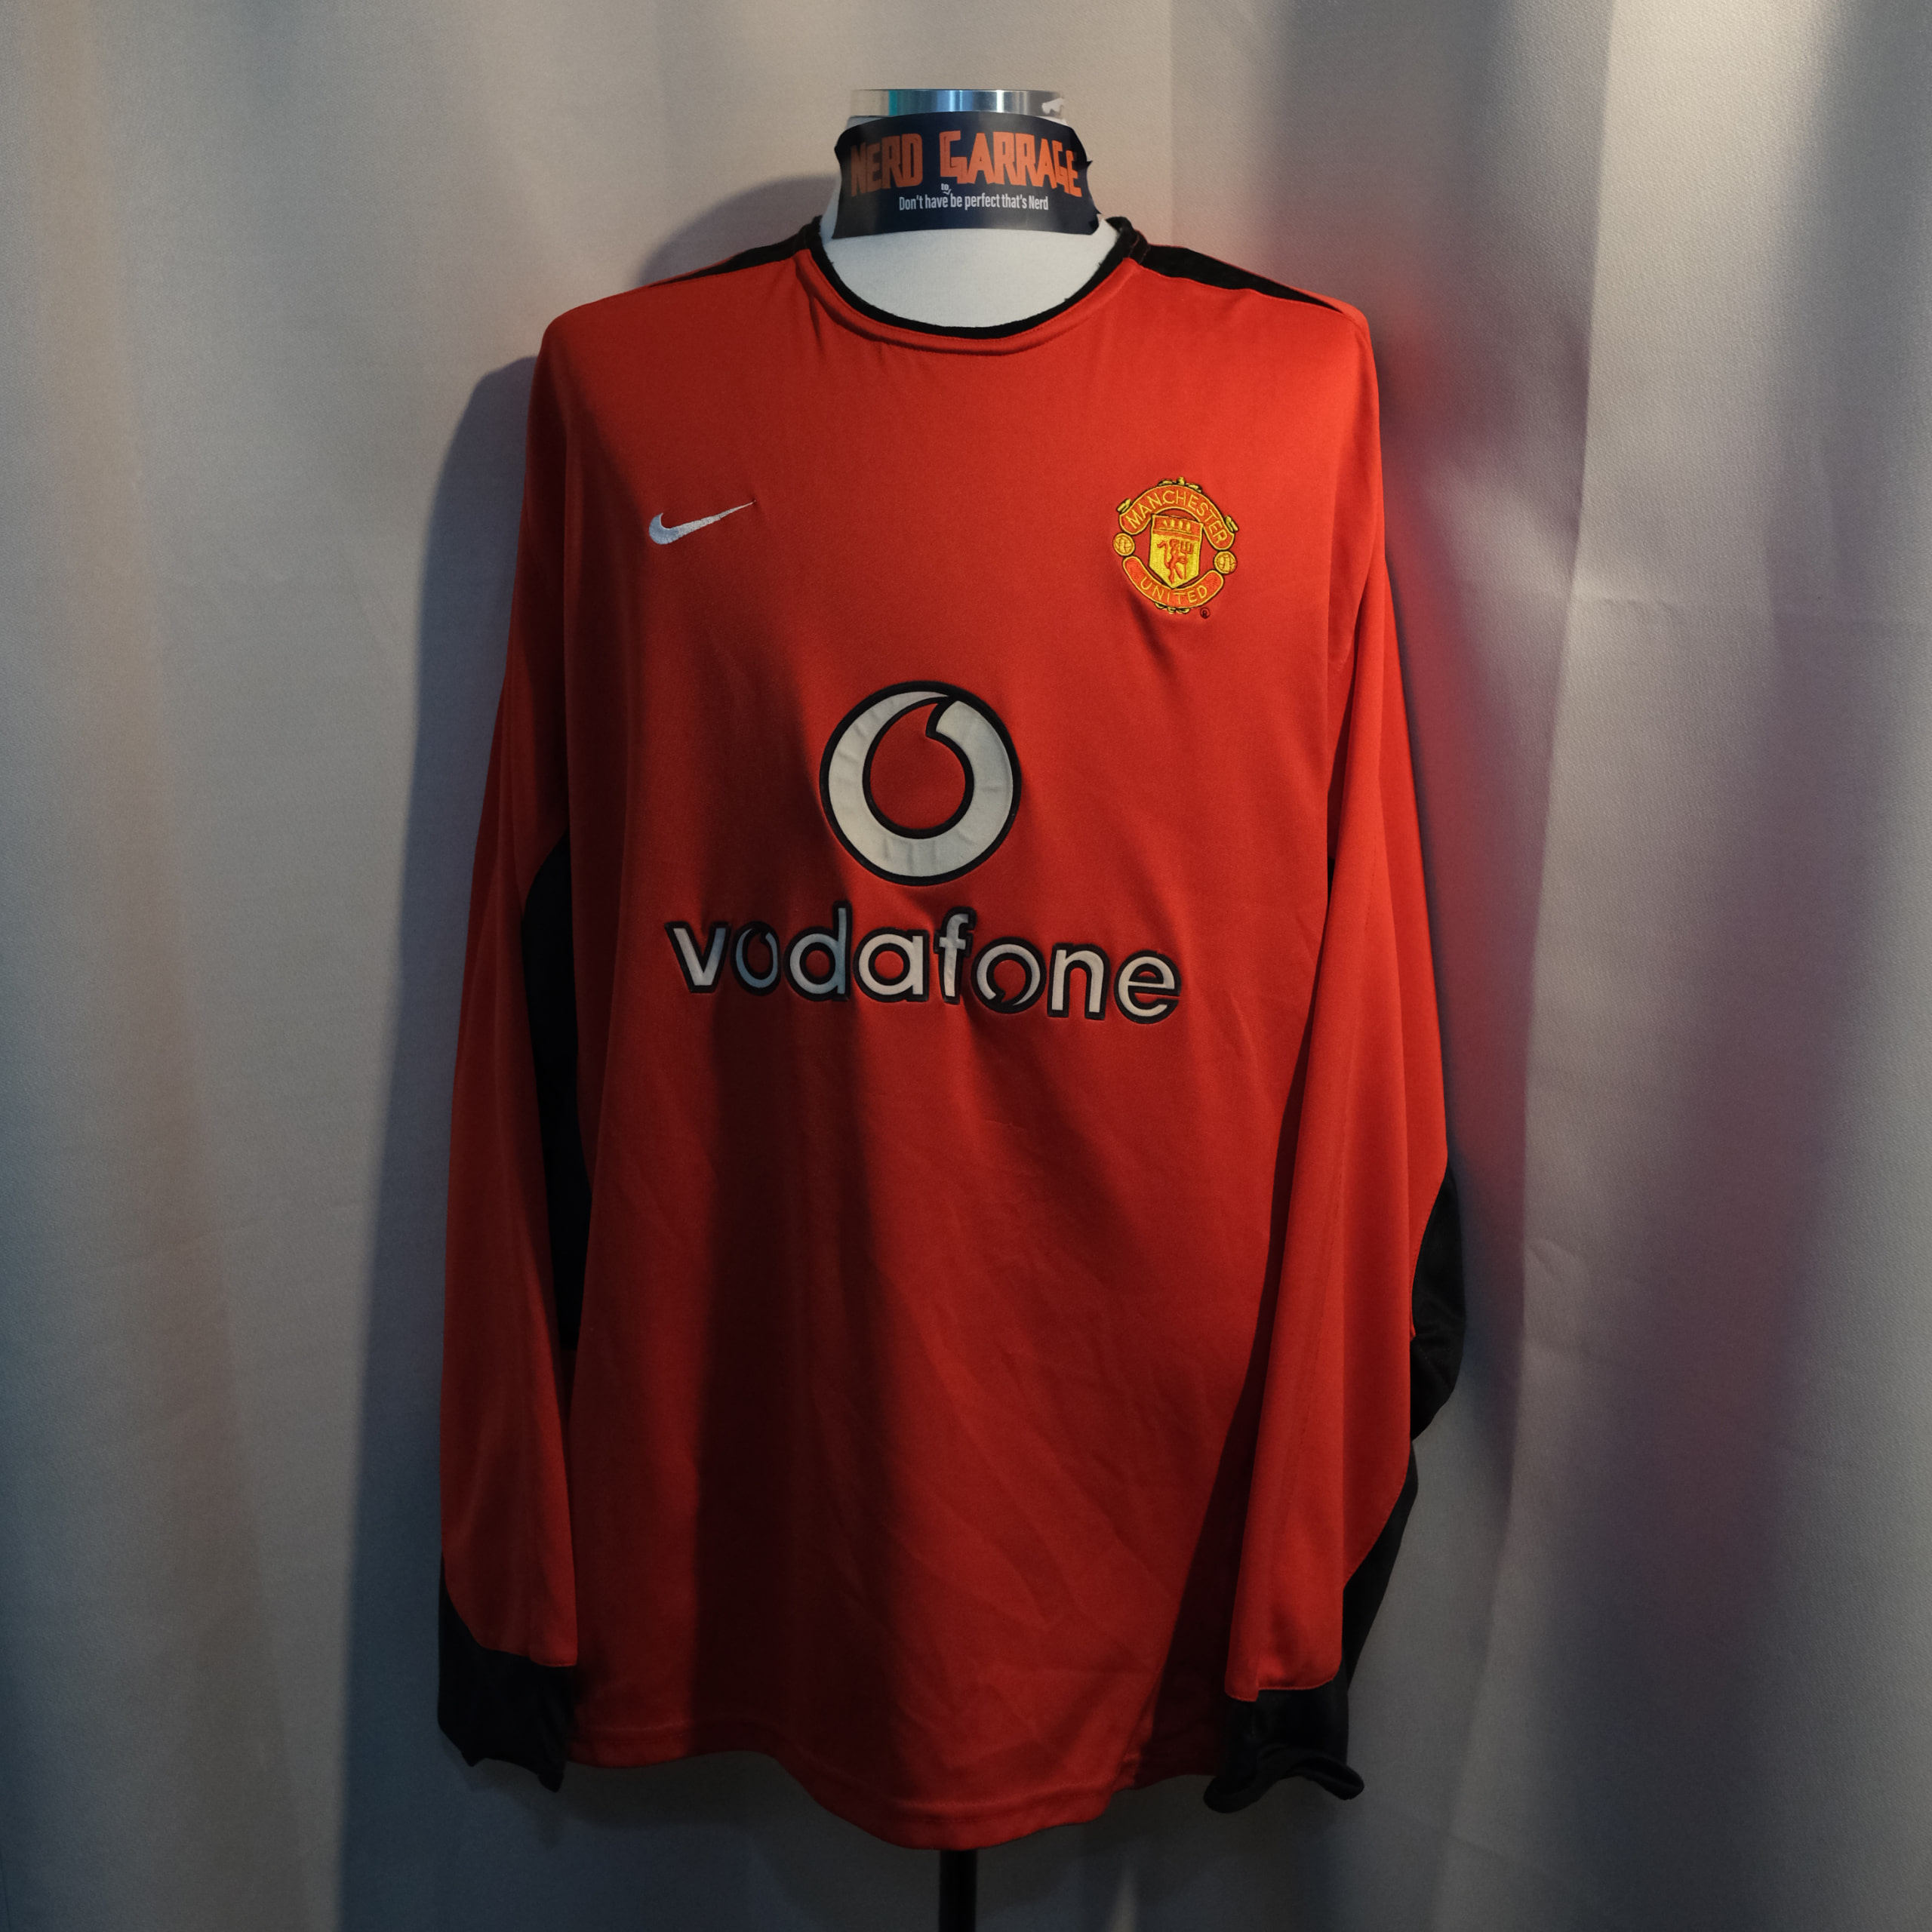 00s Manchester United Nike Vodafone Soccer Jersey